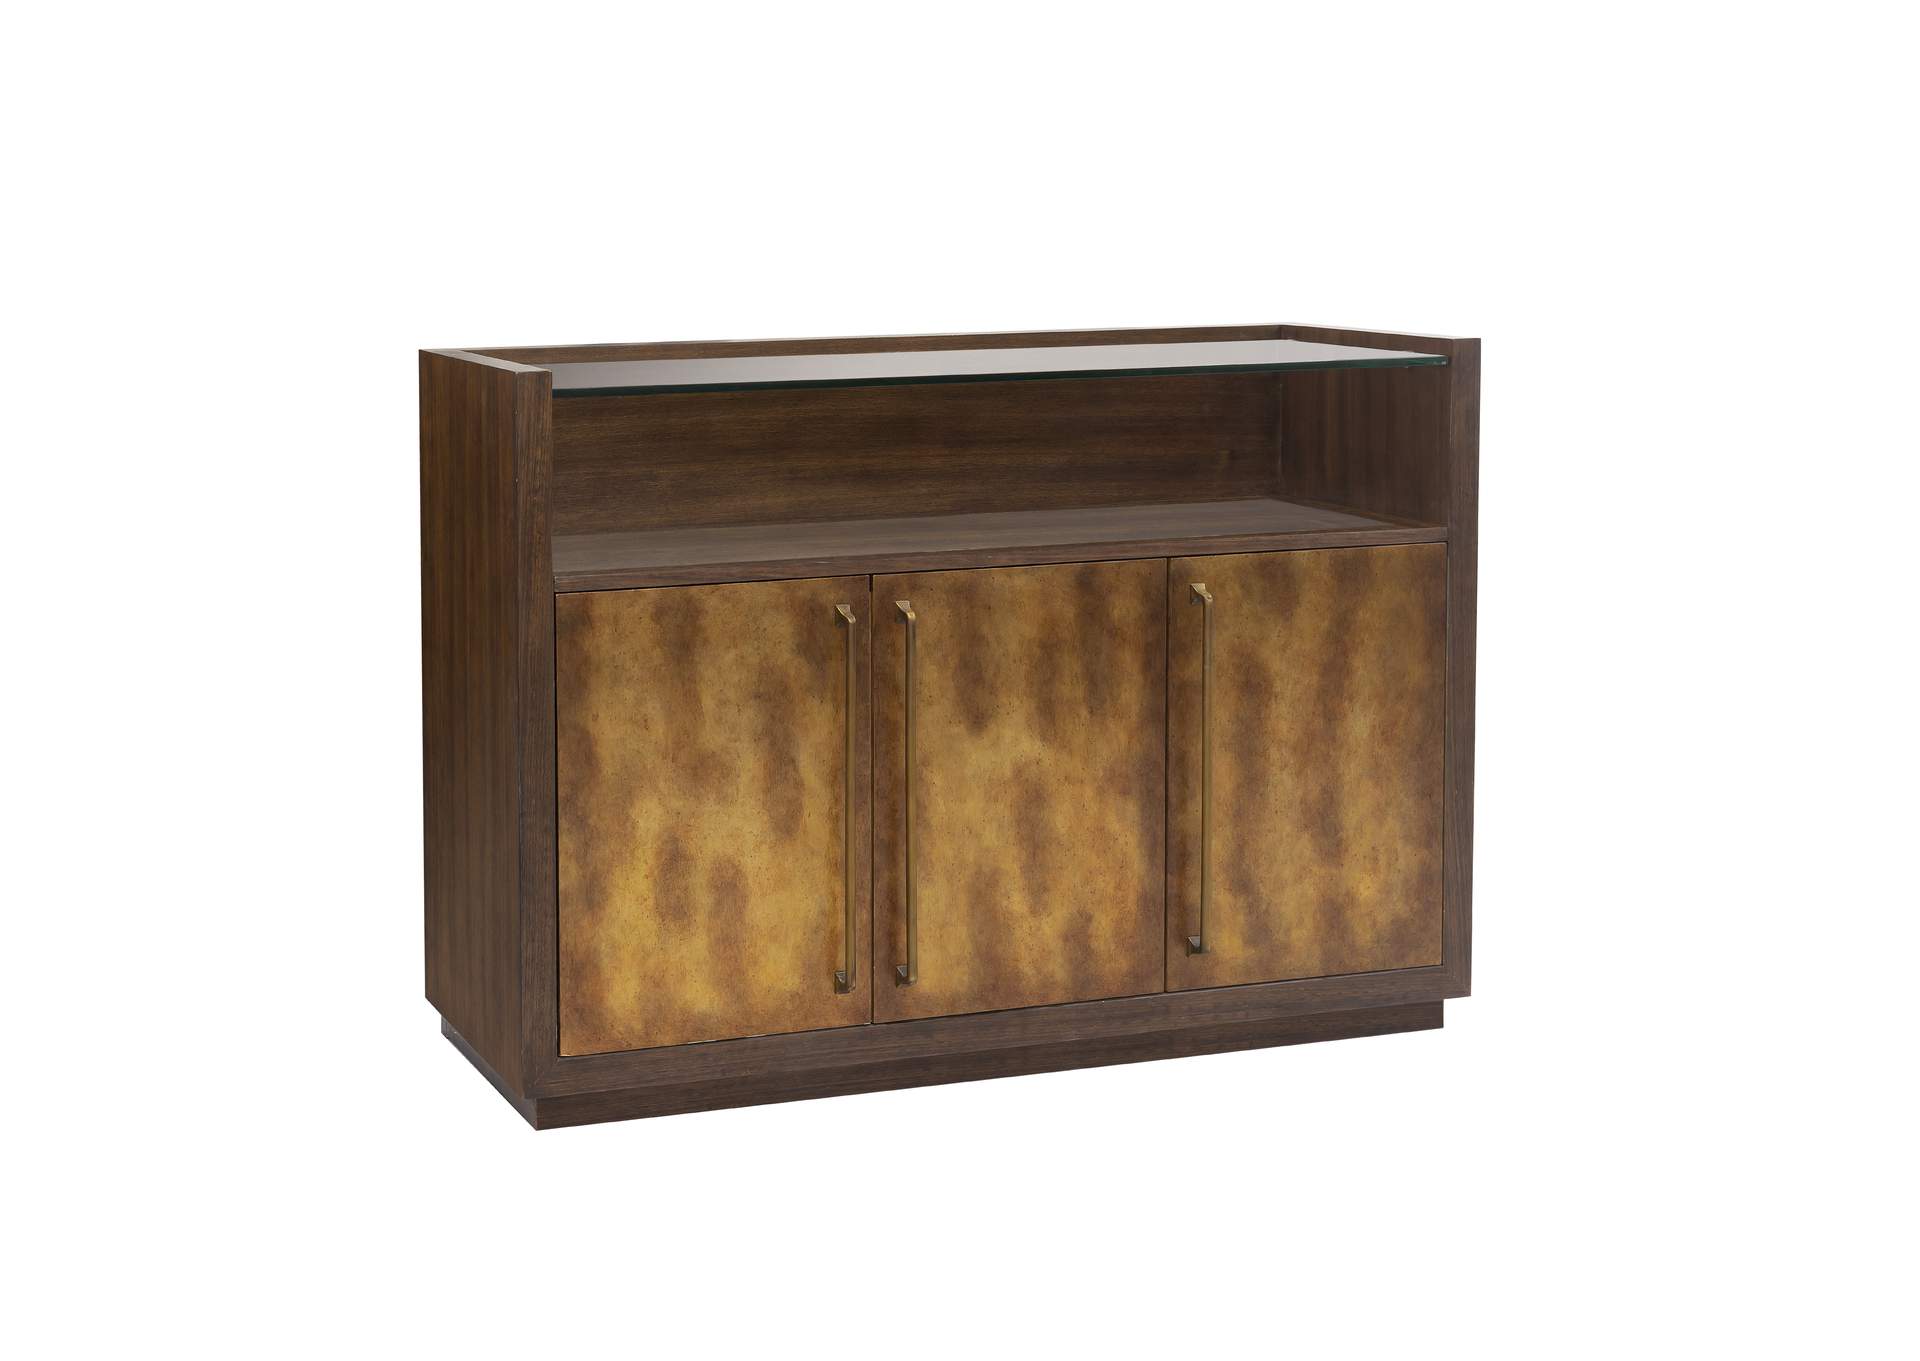 3 Door Bar Cabinet with Glass Shelves,Pulaski Furniture